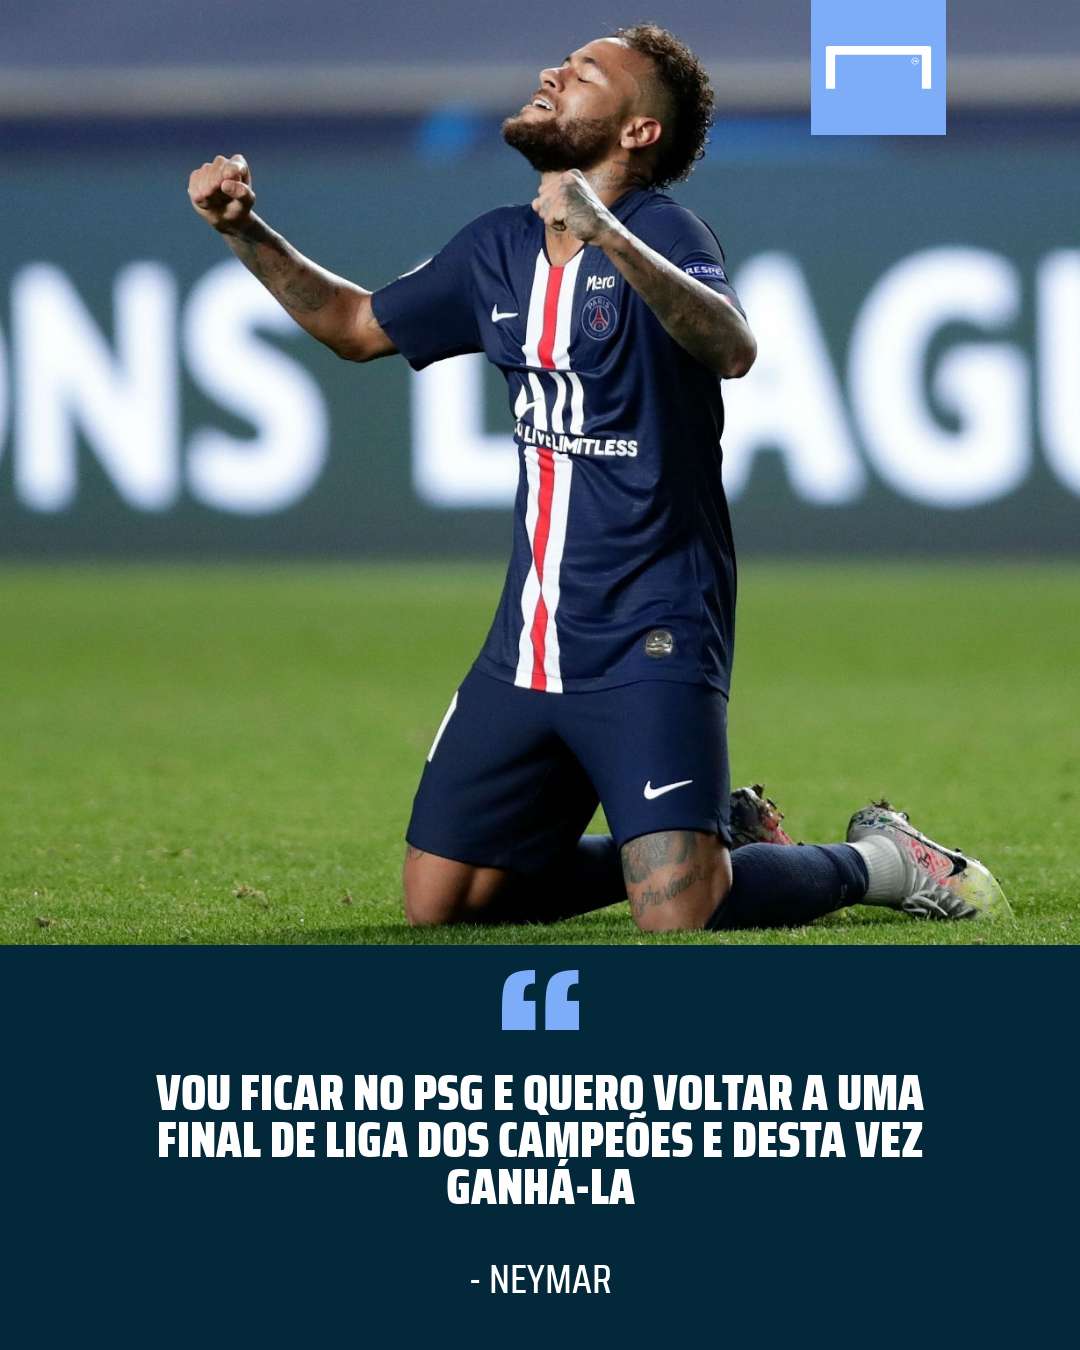 Neymar PSG Quote Portuguese